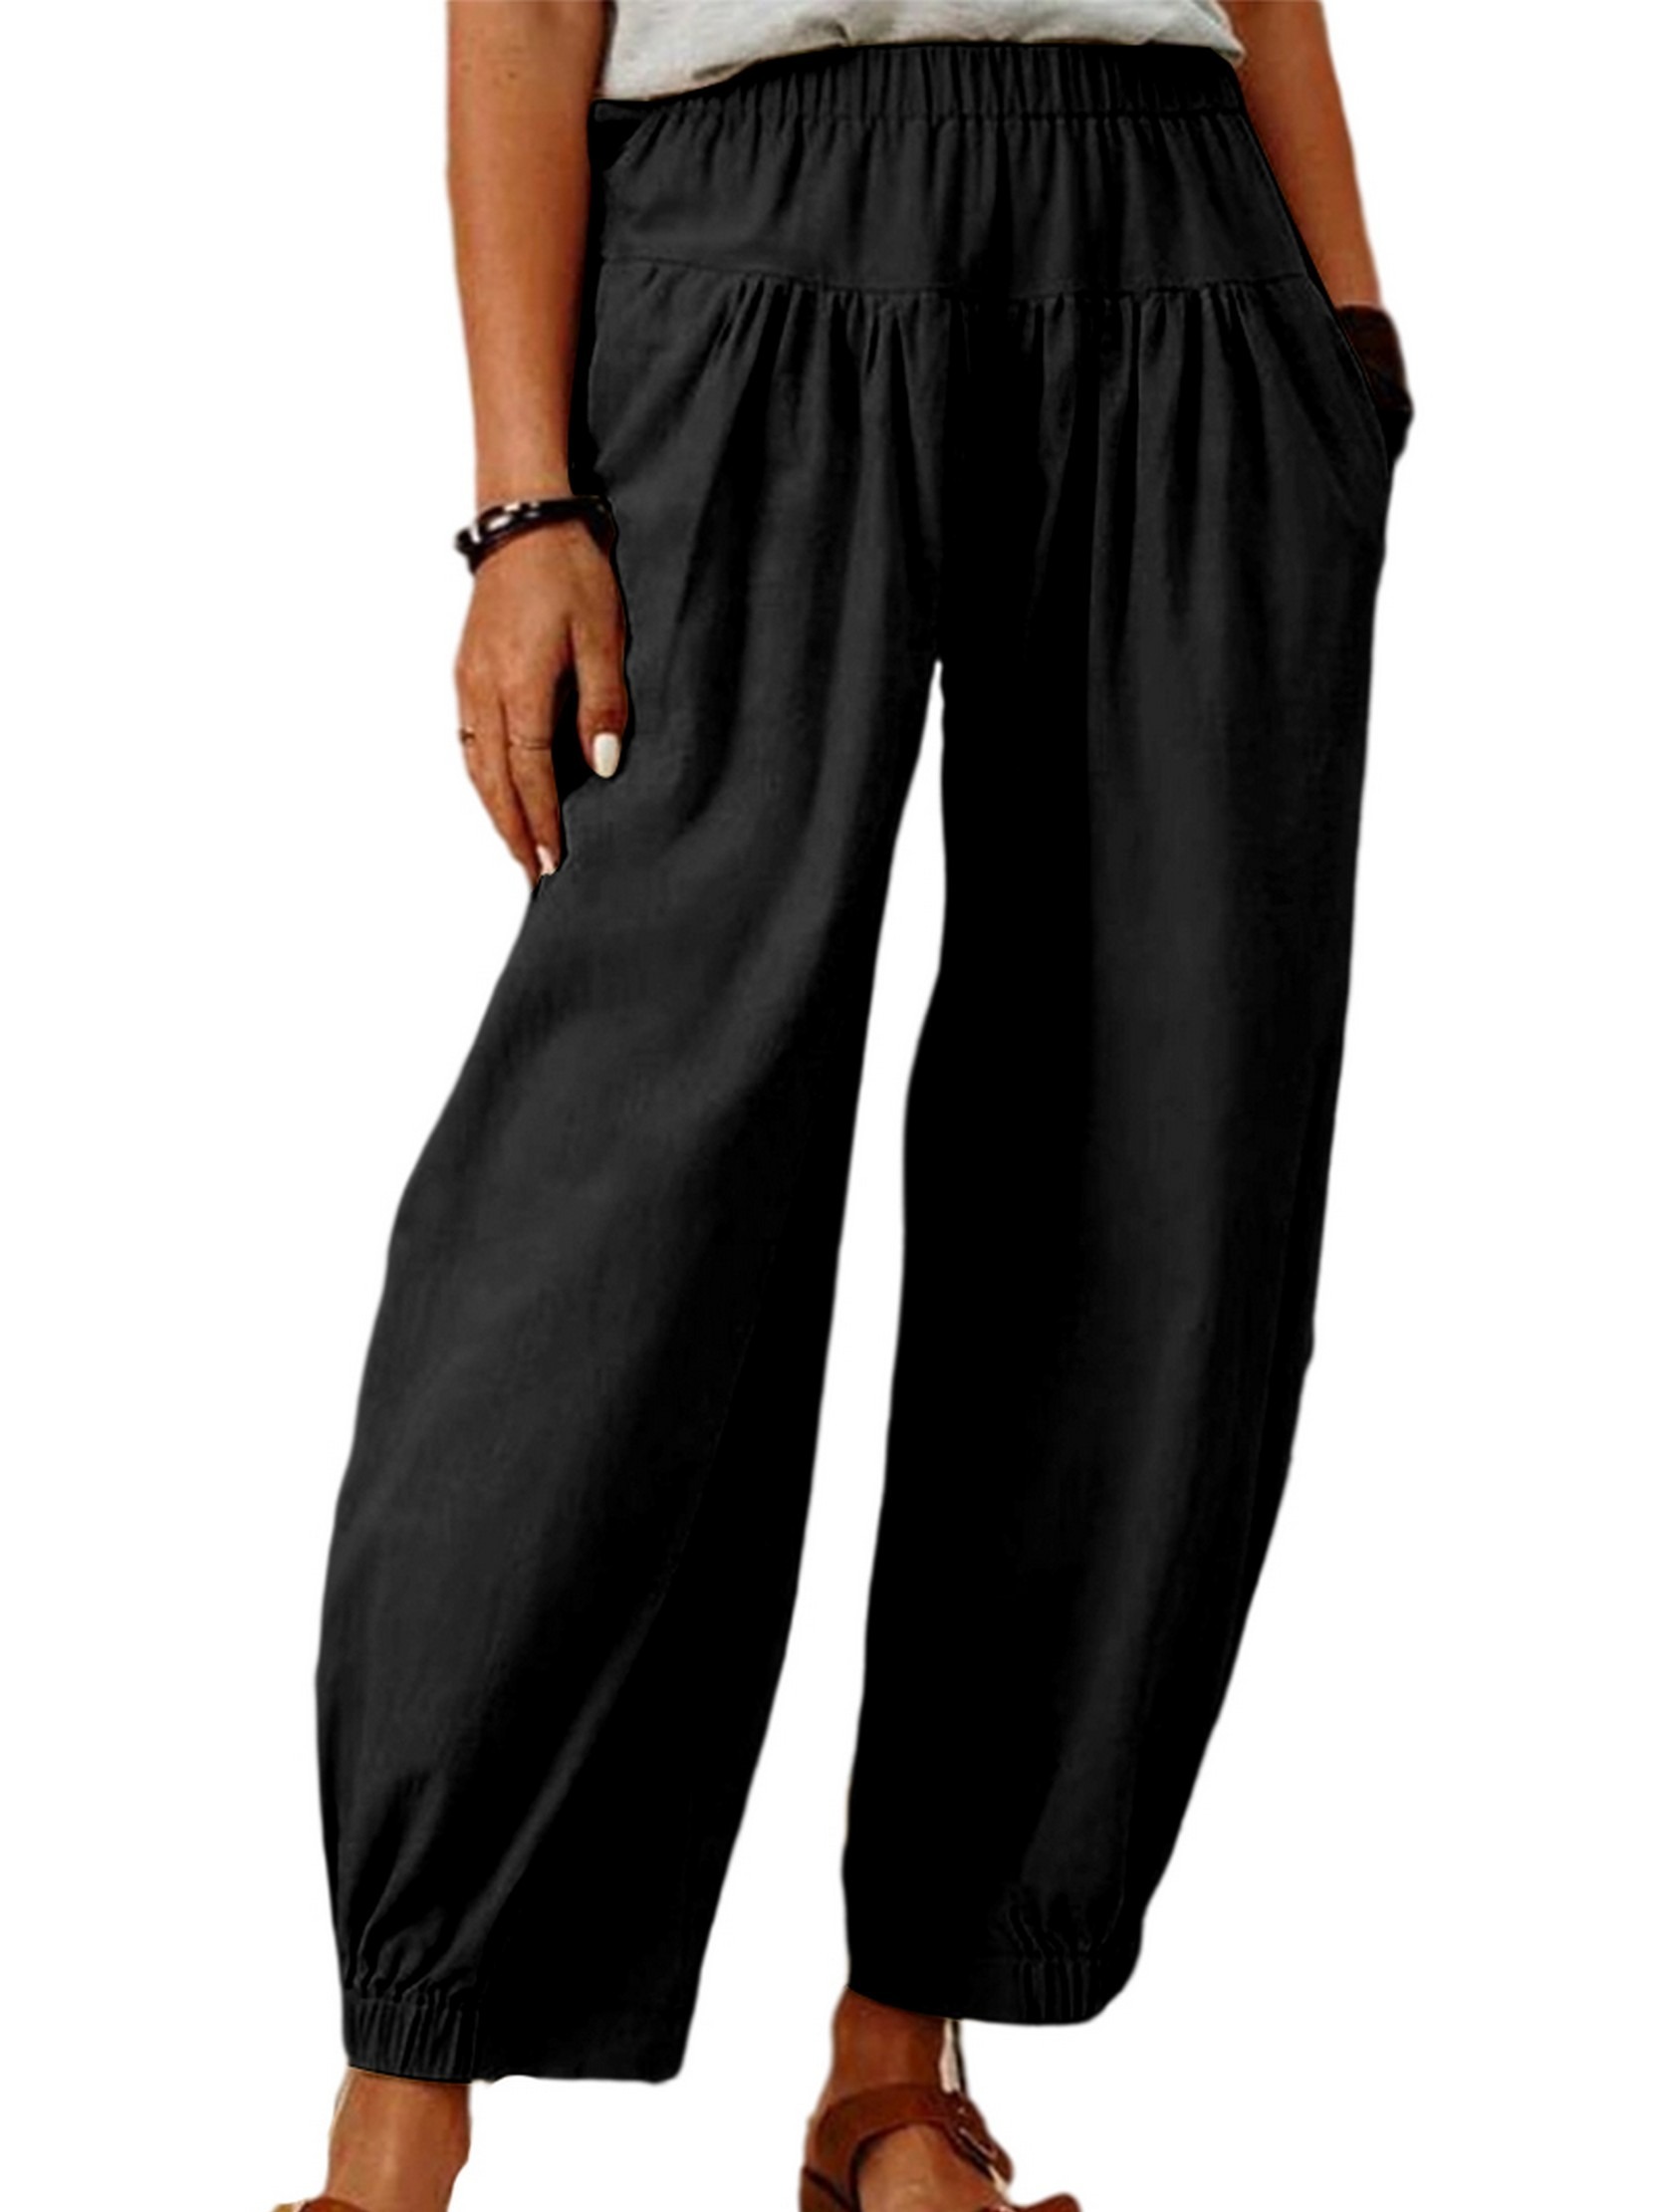 Patchwork Comfy Capri Pants for Women Casual Beach Elastic Women's